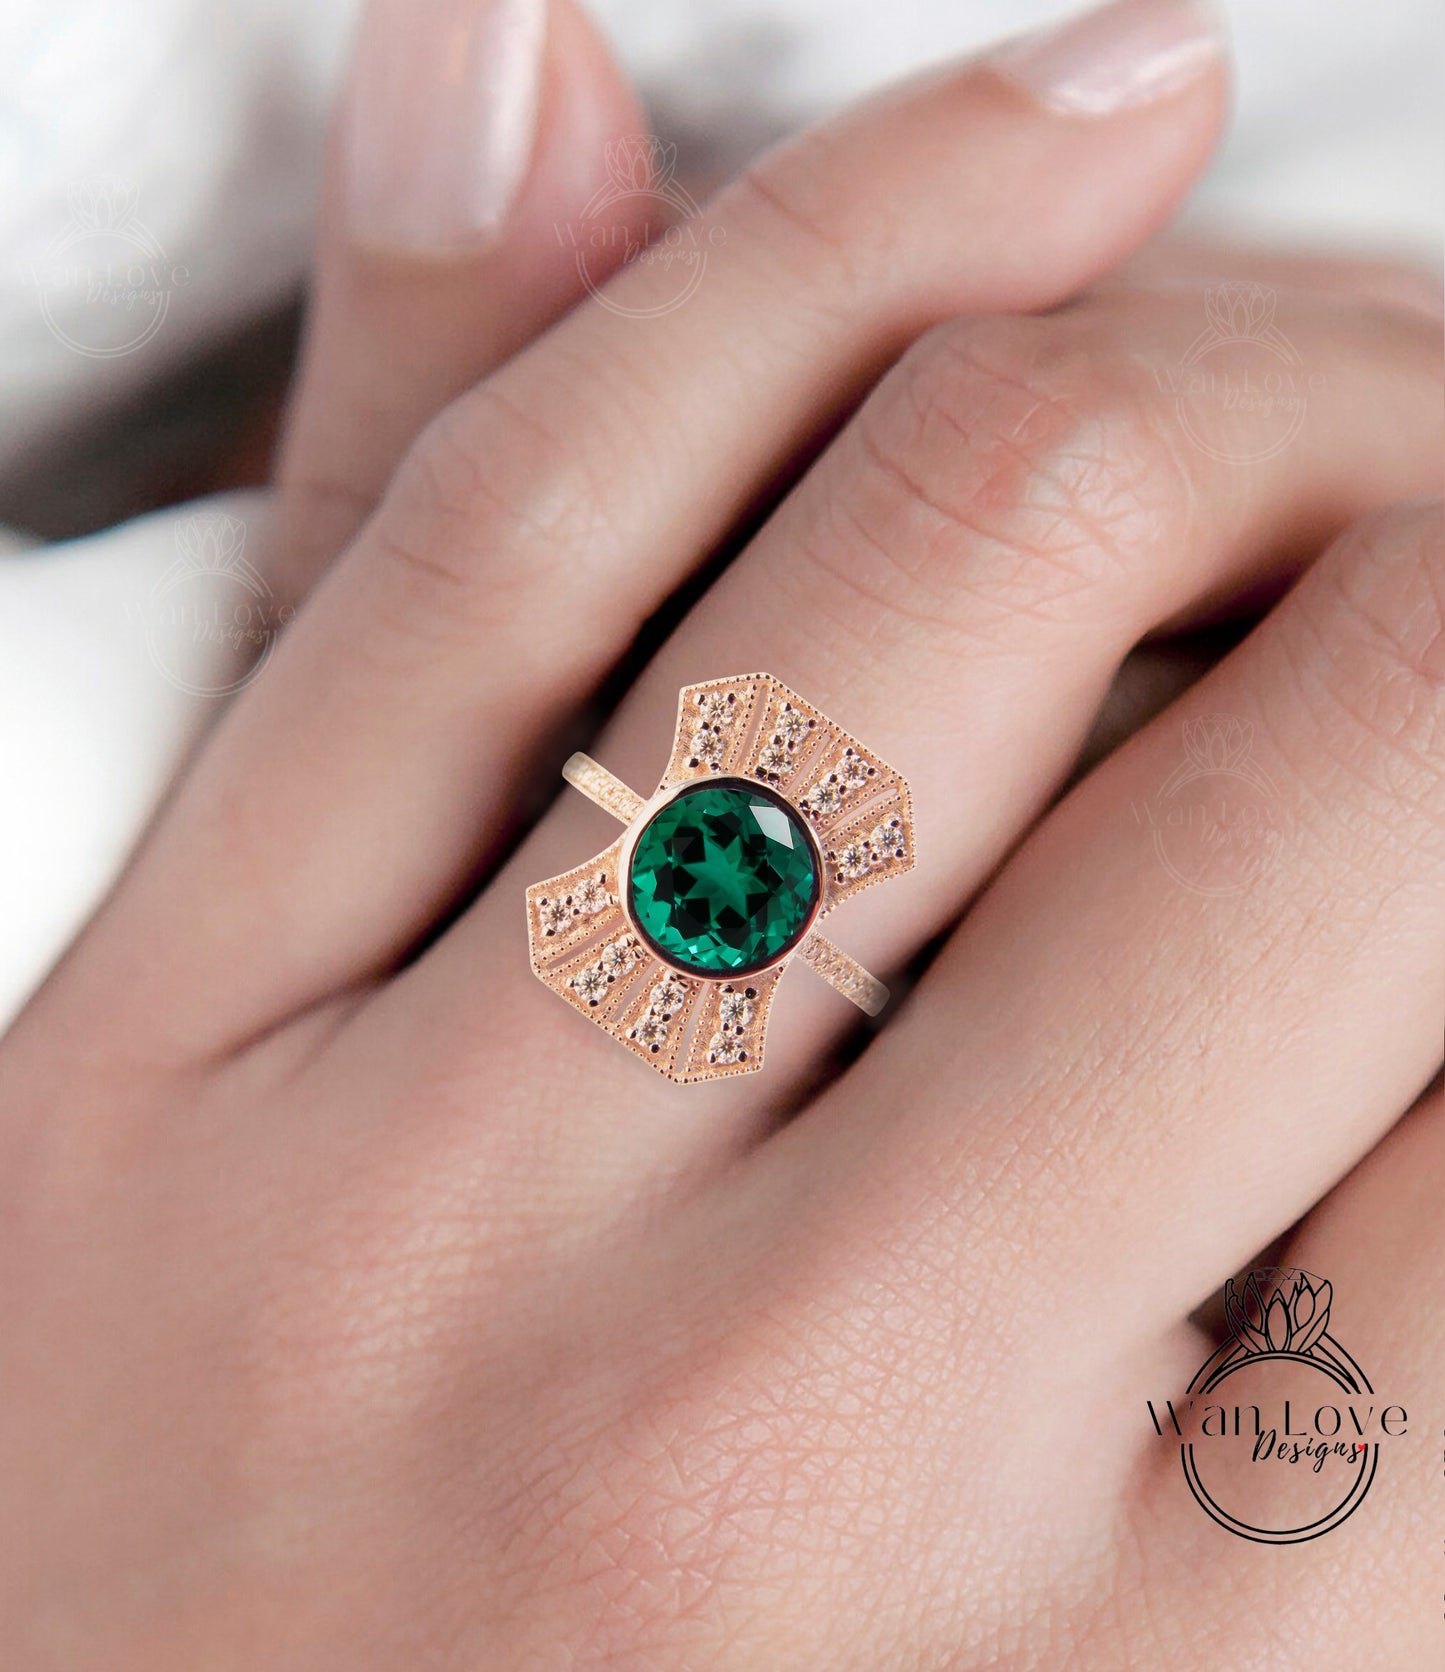 Vintage Diamond Emerald Engagement Ring, Art Deco moissanite halo ring, Milgrain round bezel ring, Antique Green ring with Diamonds halo